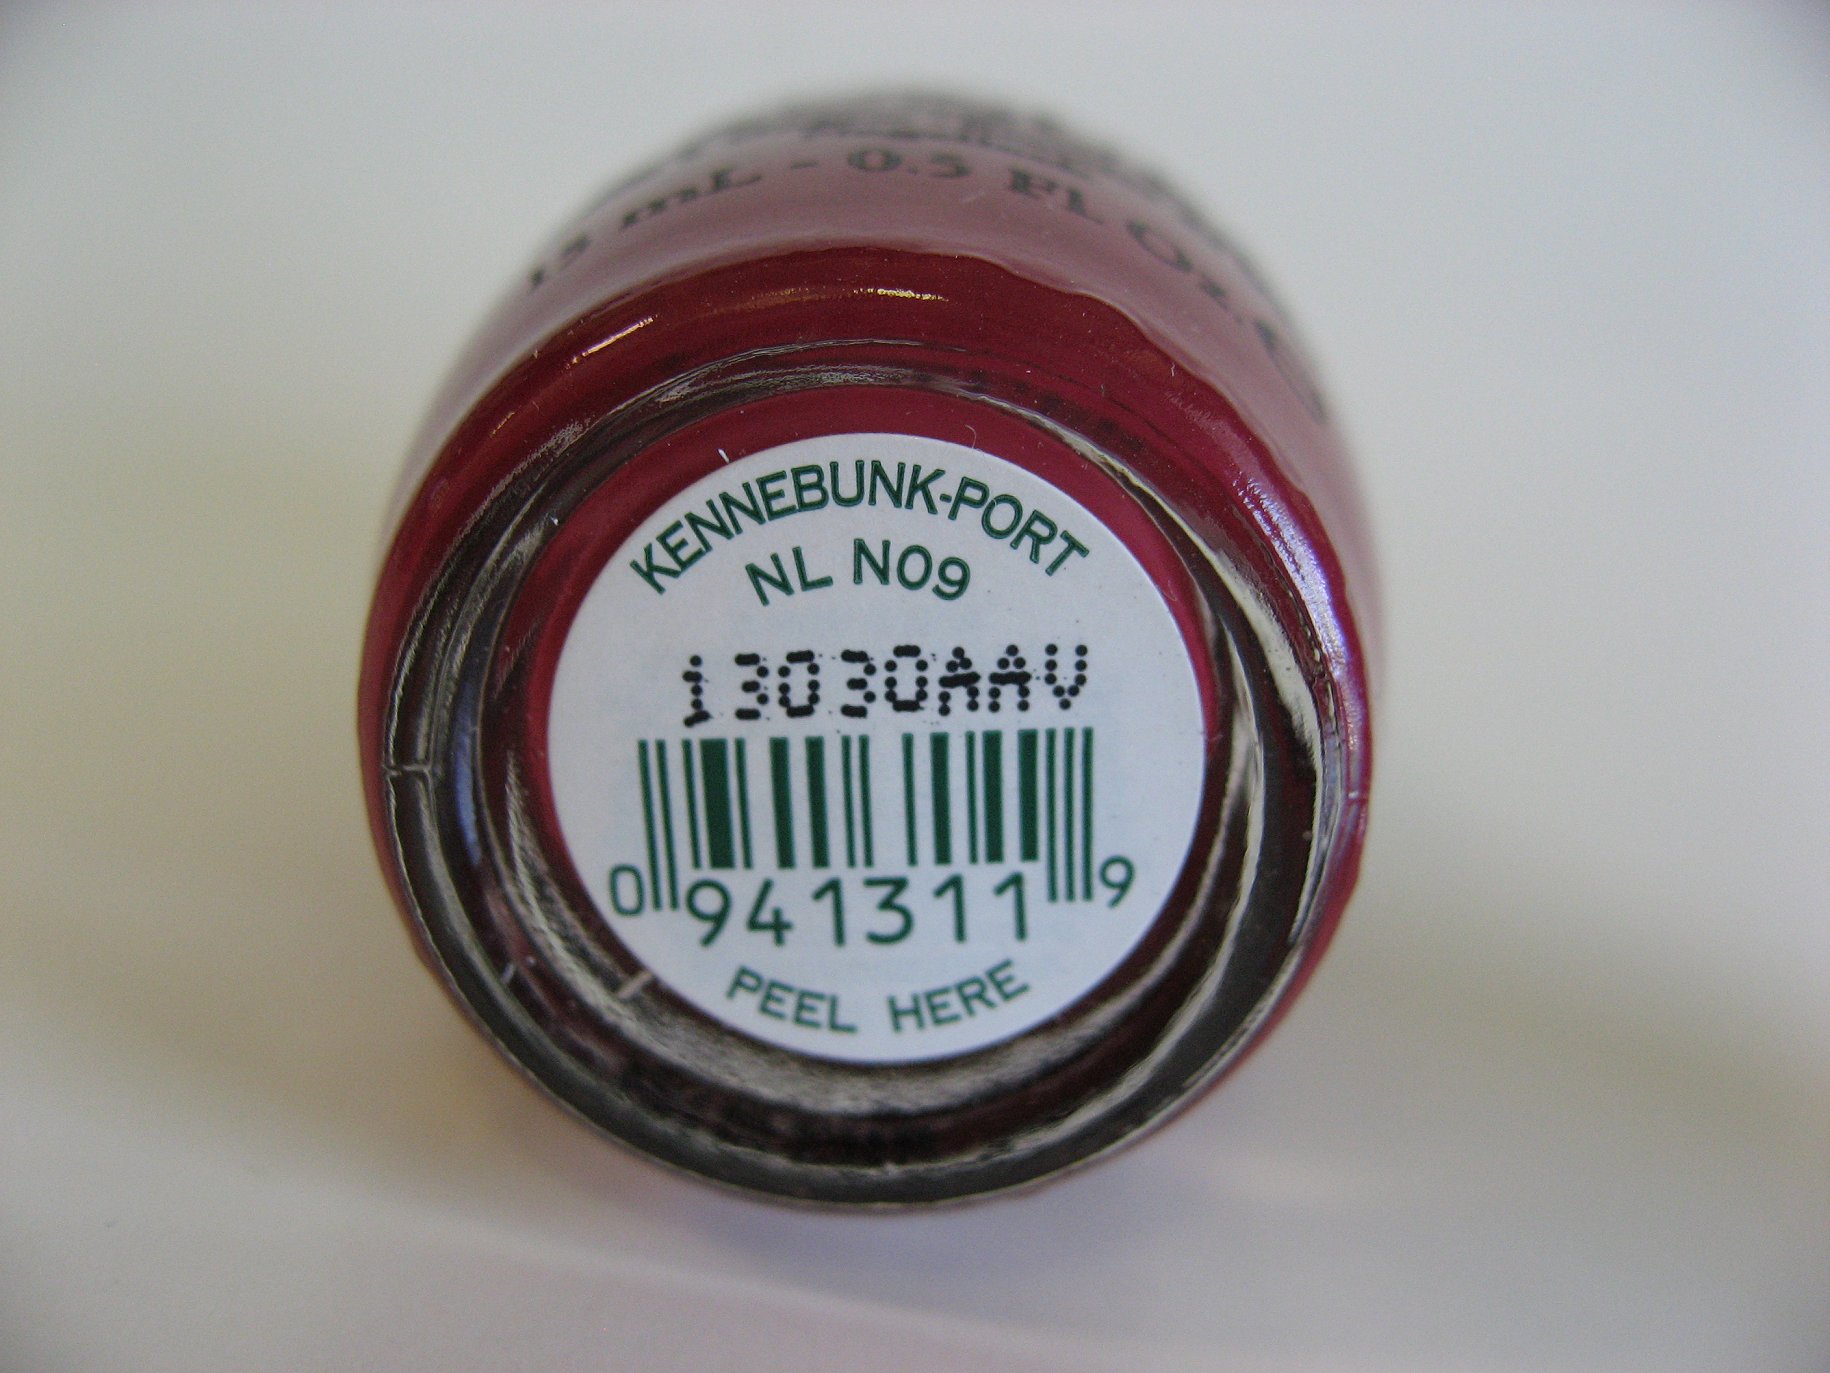 Bottom Label of Kennebunk-Port (Discontinued OPI Nail Polish)